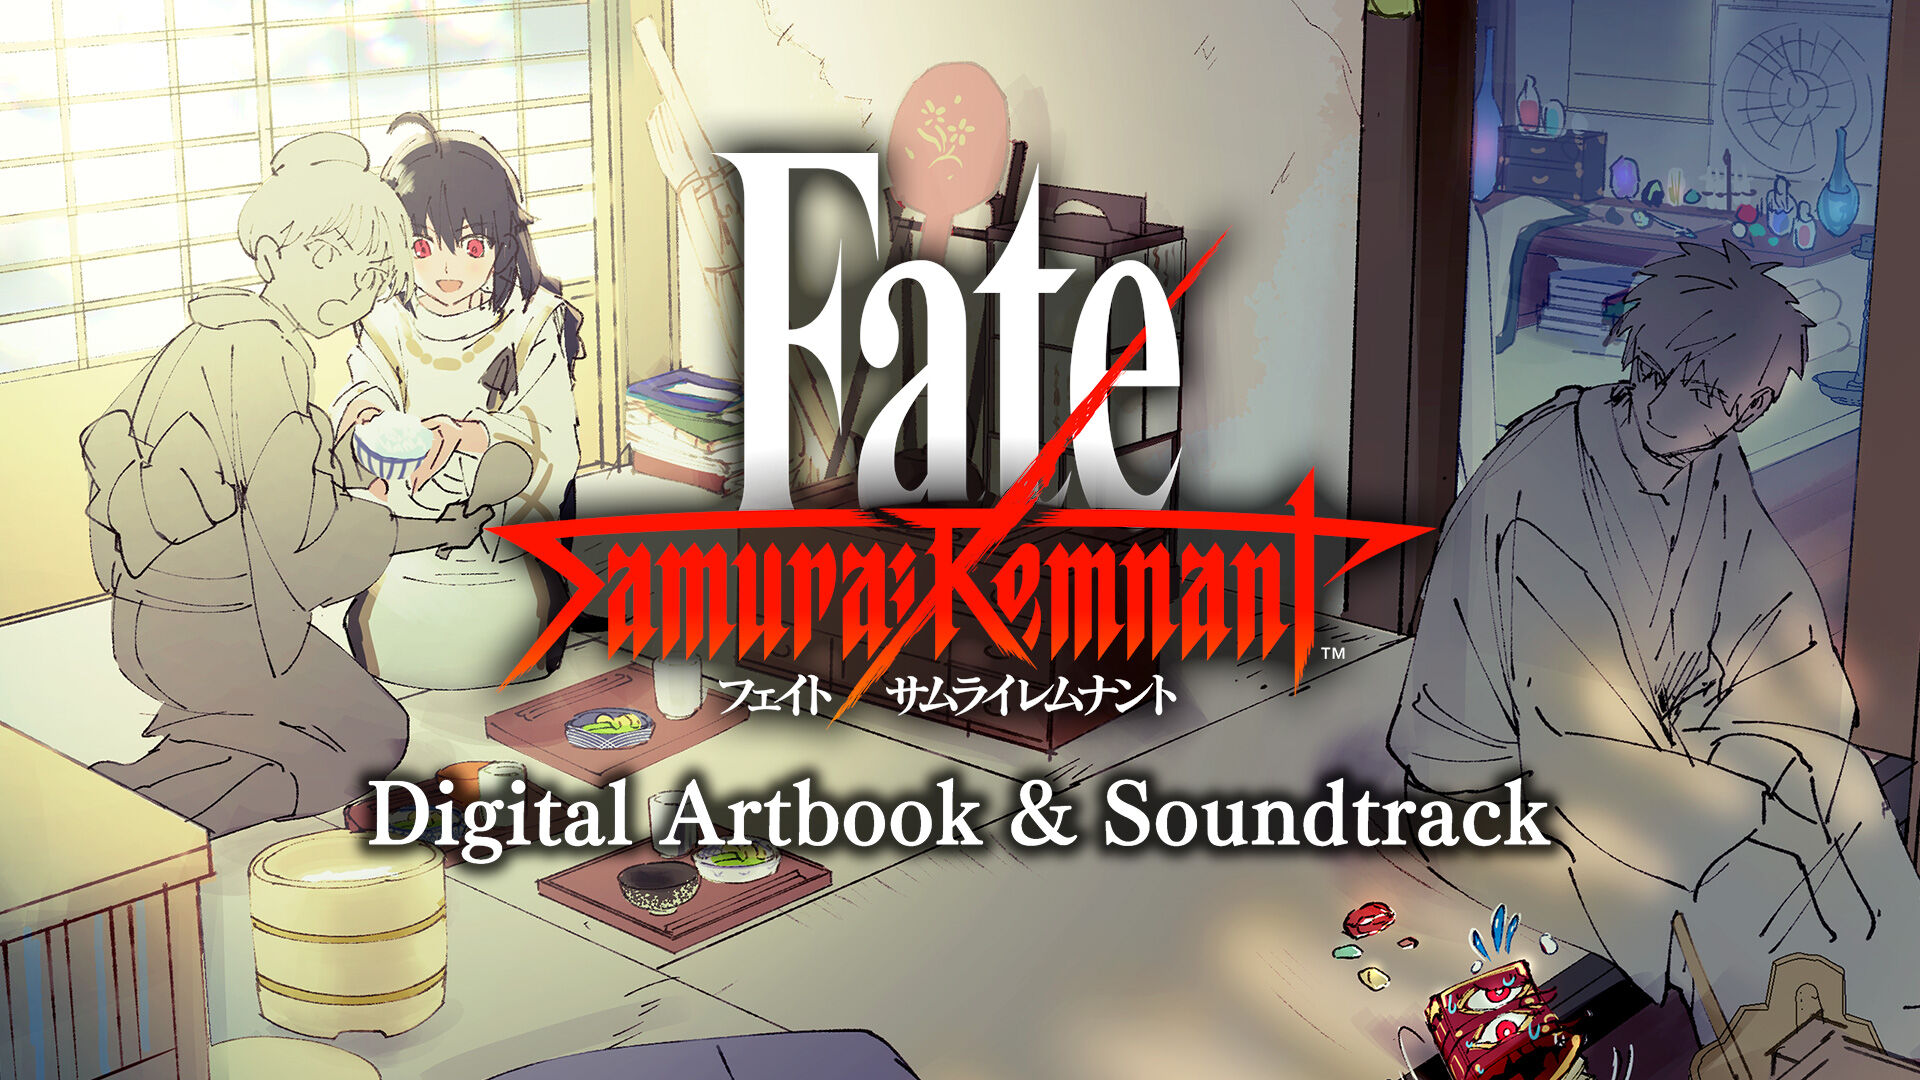 Fate/Samurai Remnant material サントラCD付 新品-